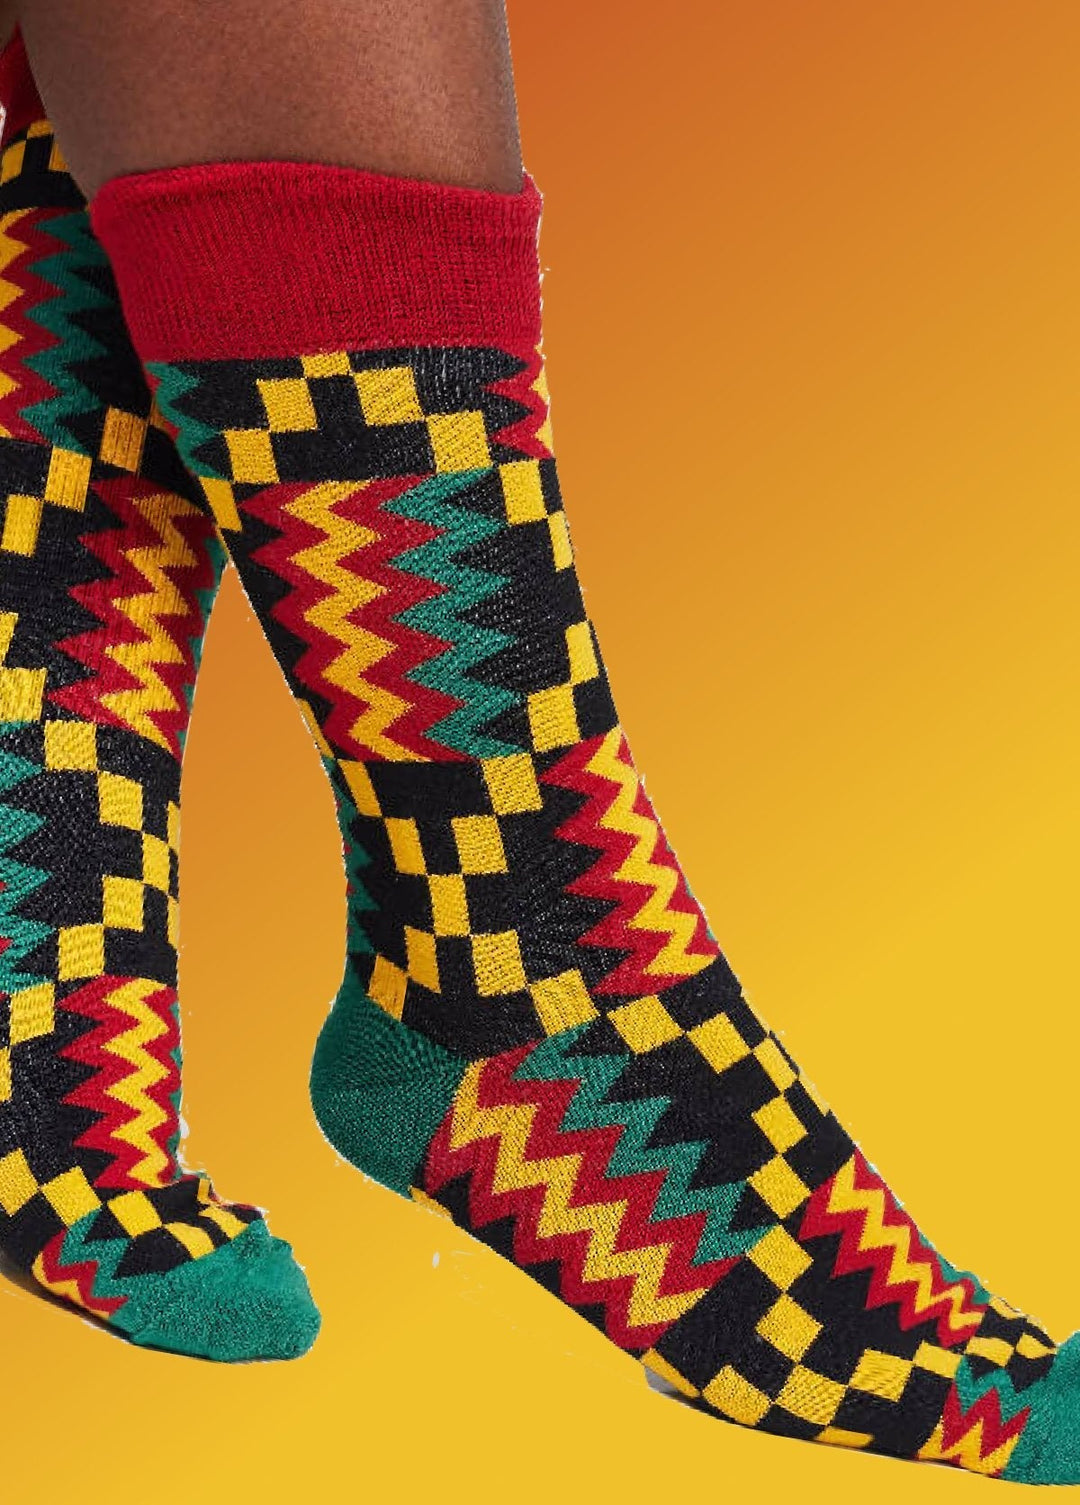 Socken aus Kenia ‚Mwangaza‘ - mikono.africa Jacken aus Kenia bunte Bomberjacke Partyjacke faire sozial nachhaltig designed in Kenia